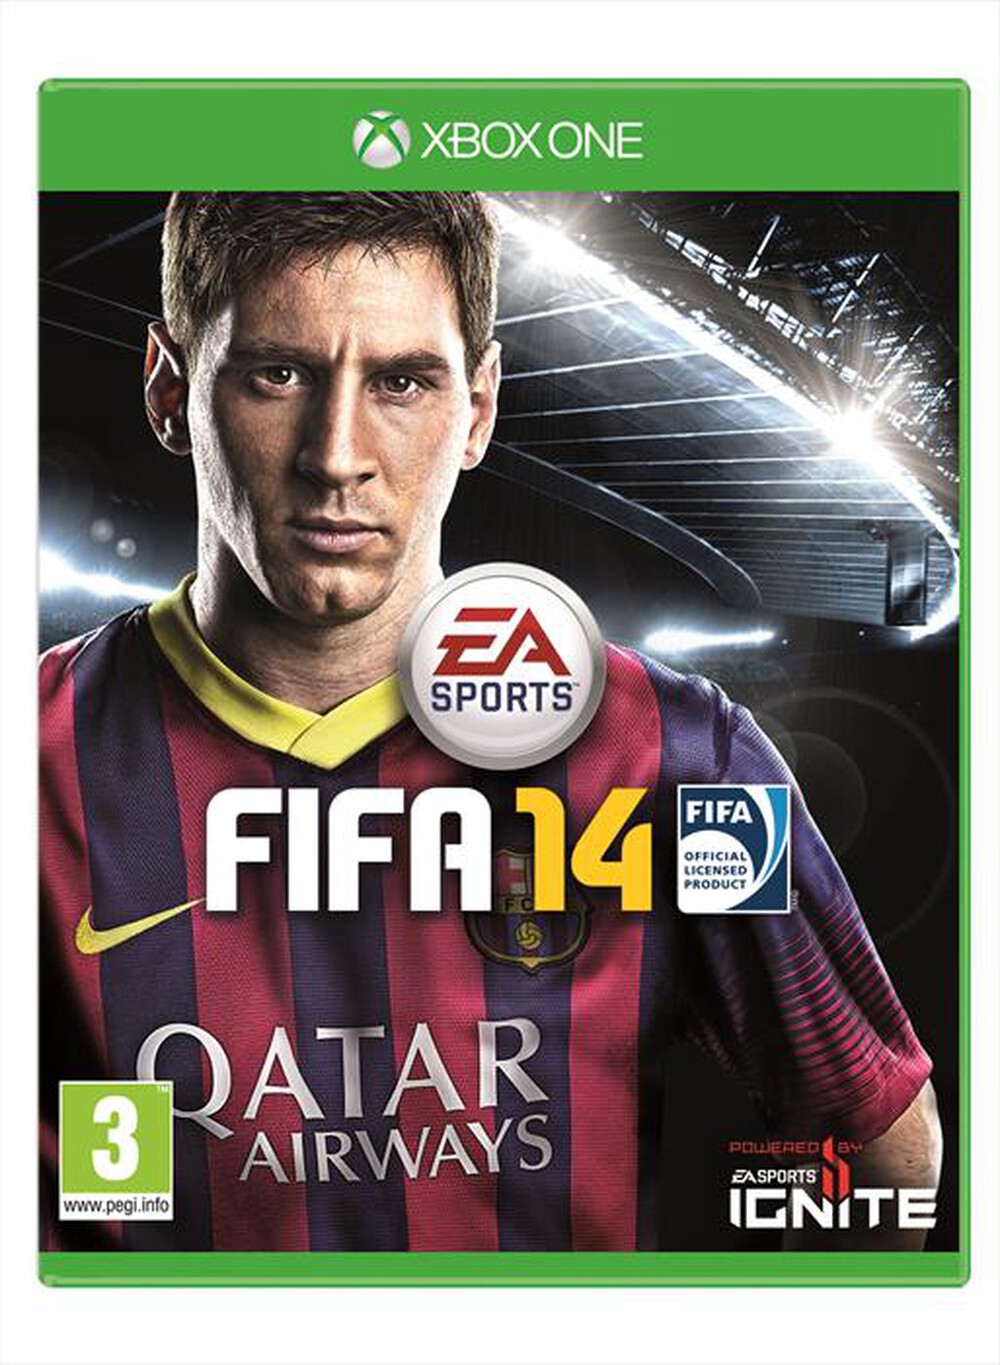 "ELECTRONIC ARTS - FIFA 14 Xbox One - "